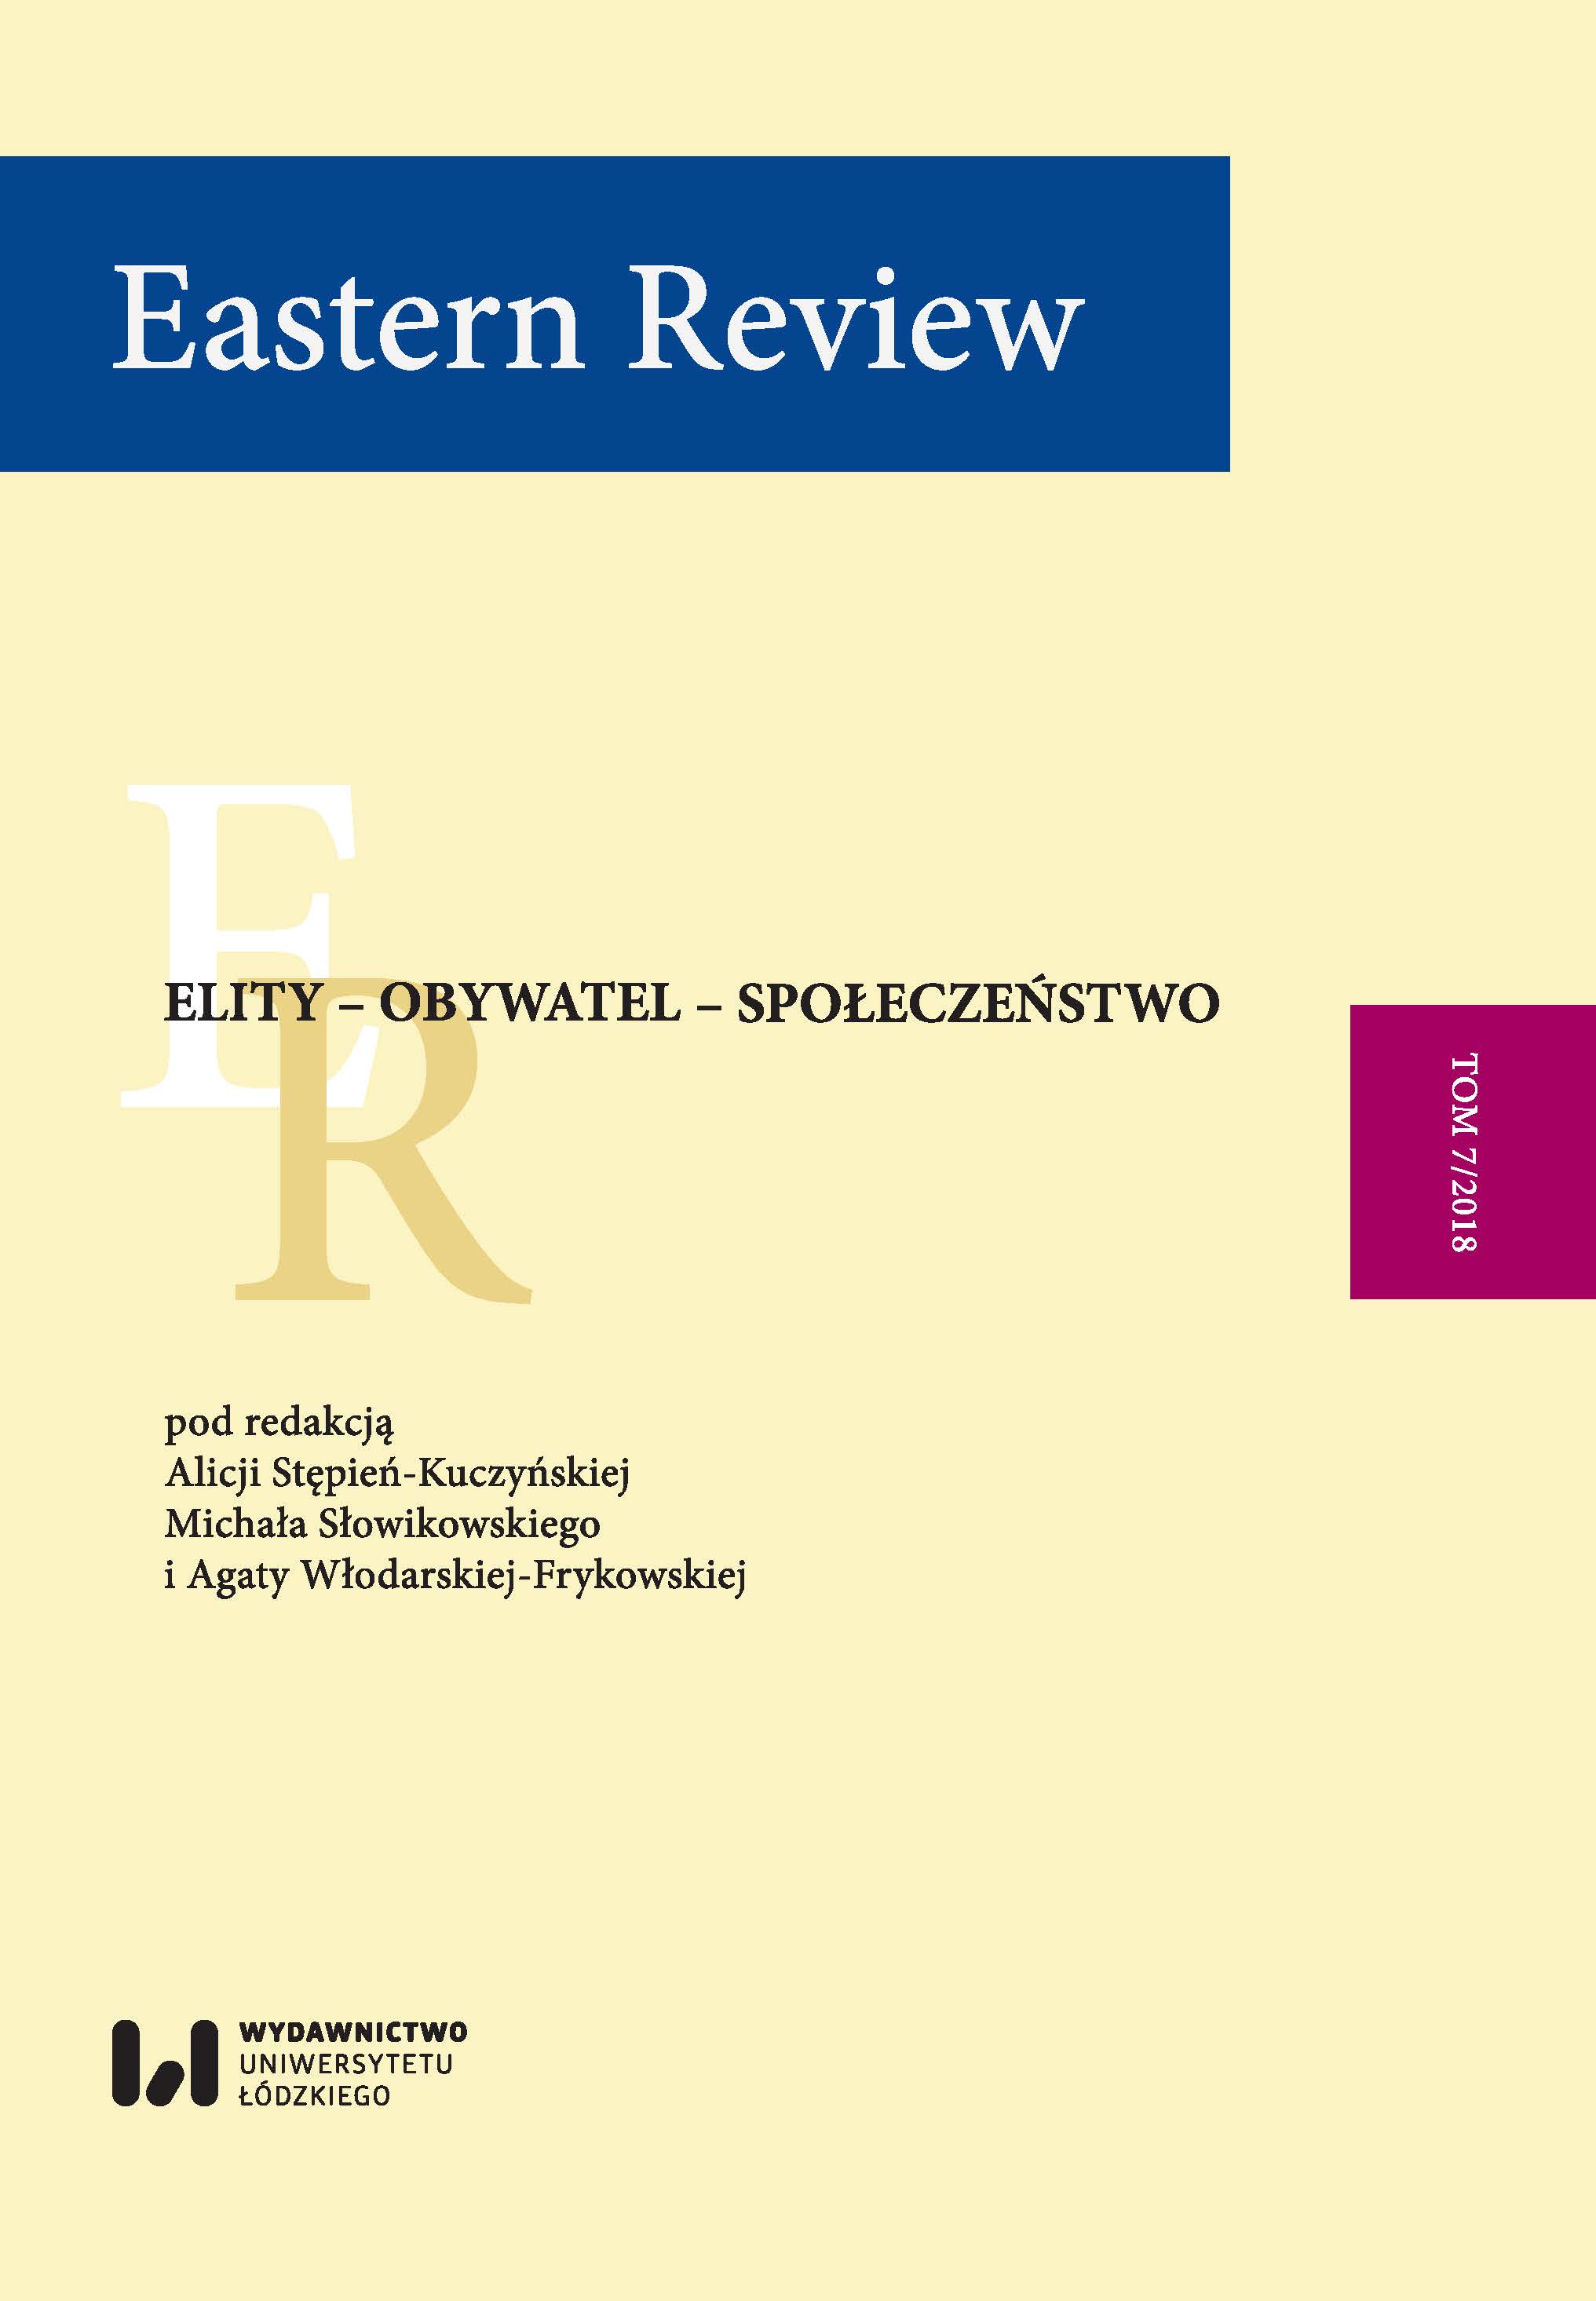 Participatory budgeting of Lesser Poland Voivodeship Cover Image